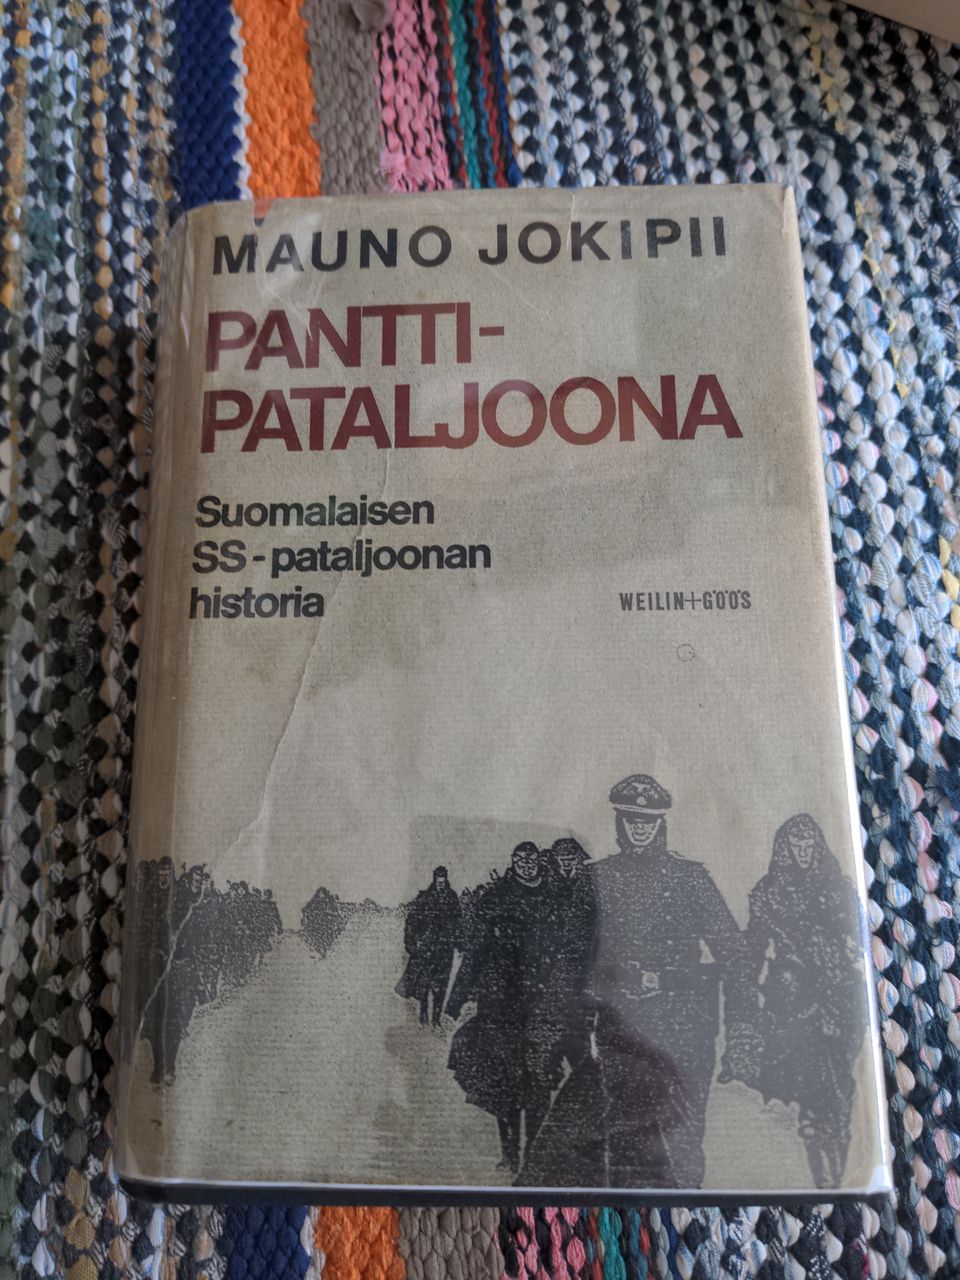 Mauno Jokipii: Panttipataljoona